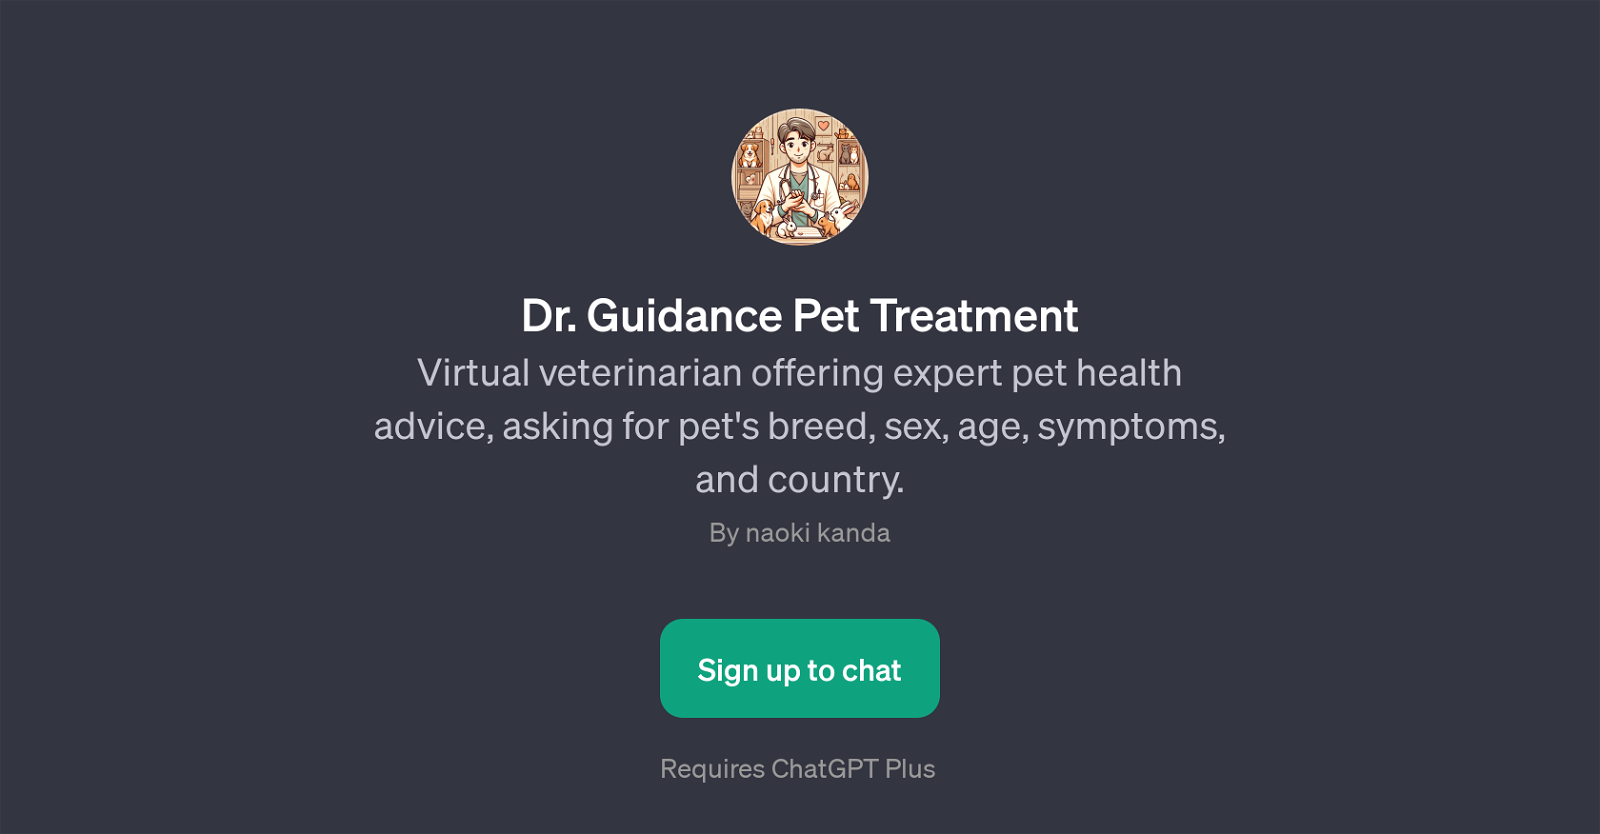 Dr. Guidance Pet Treatment website